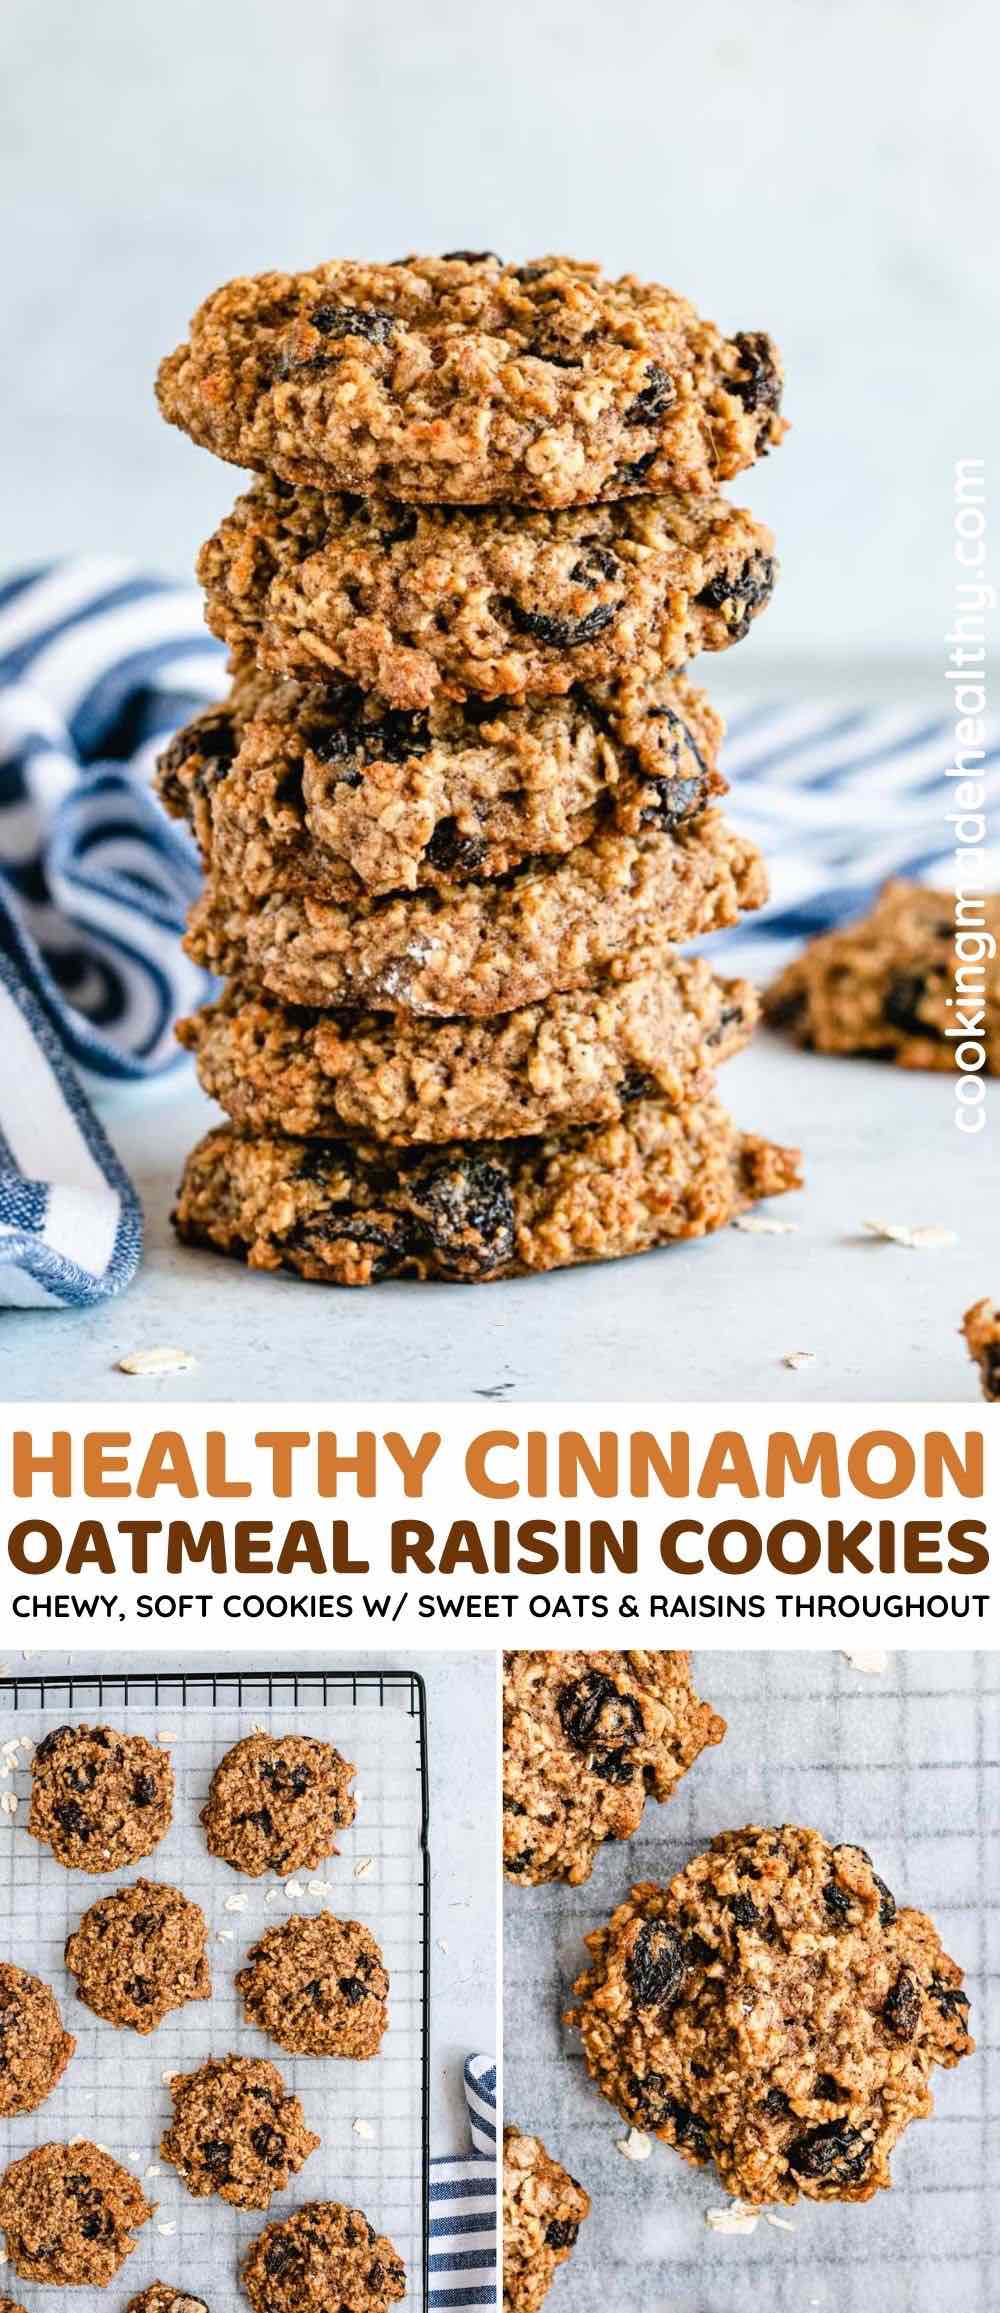 Cinnamon Oatmeal Raisin Cookies collage